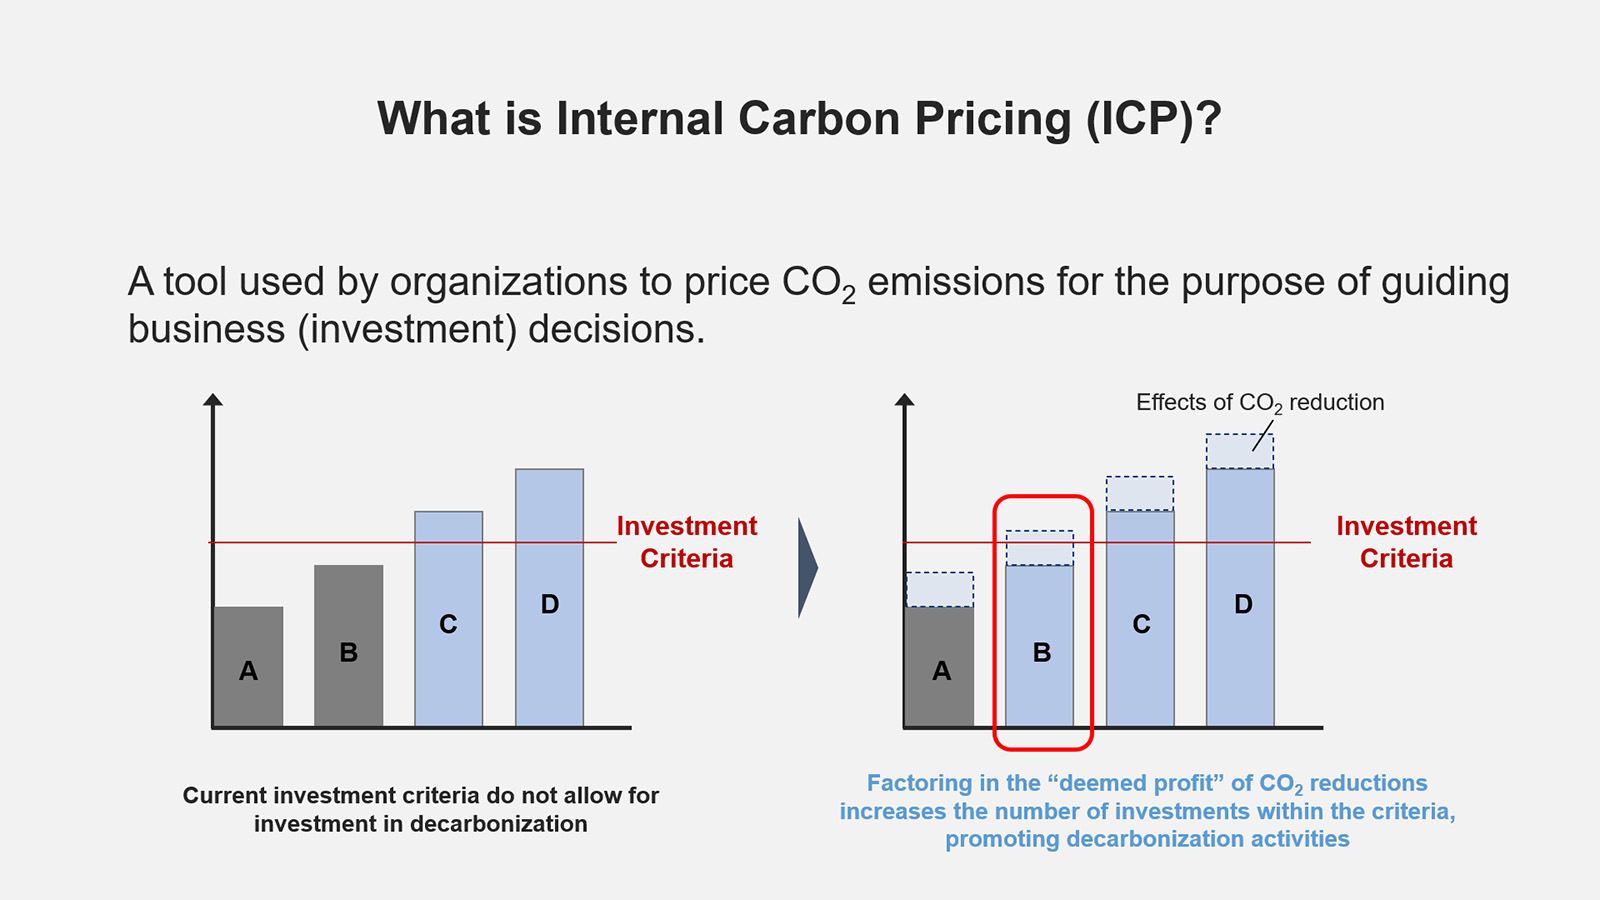 Illustration: Internal Carbon Pricing (ICP) system